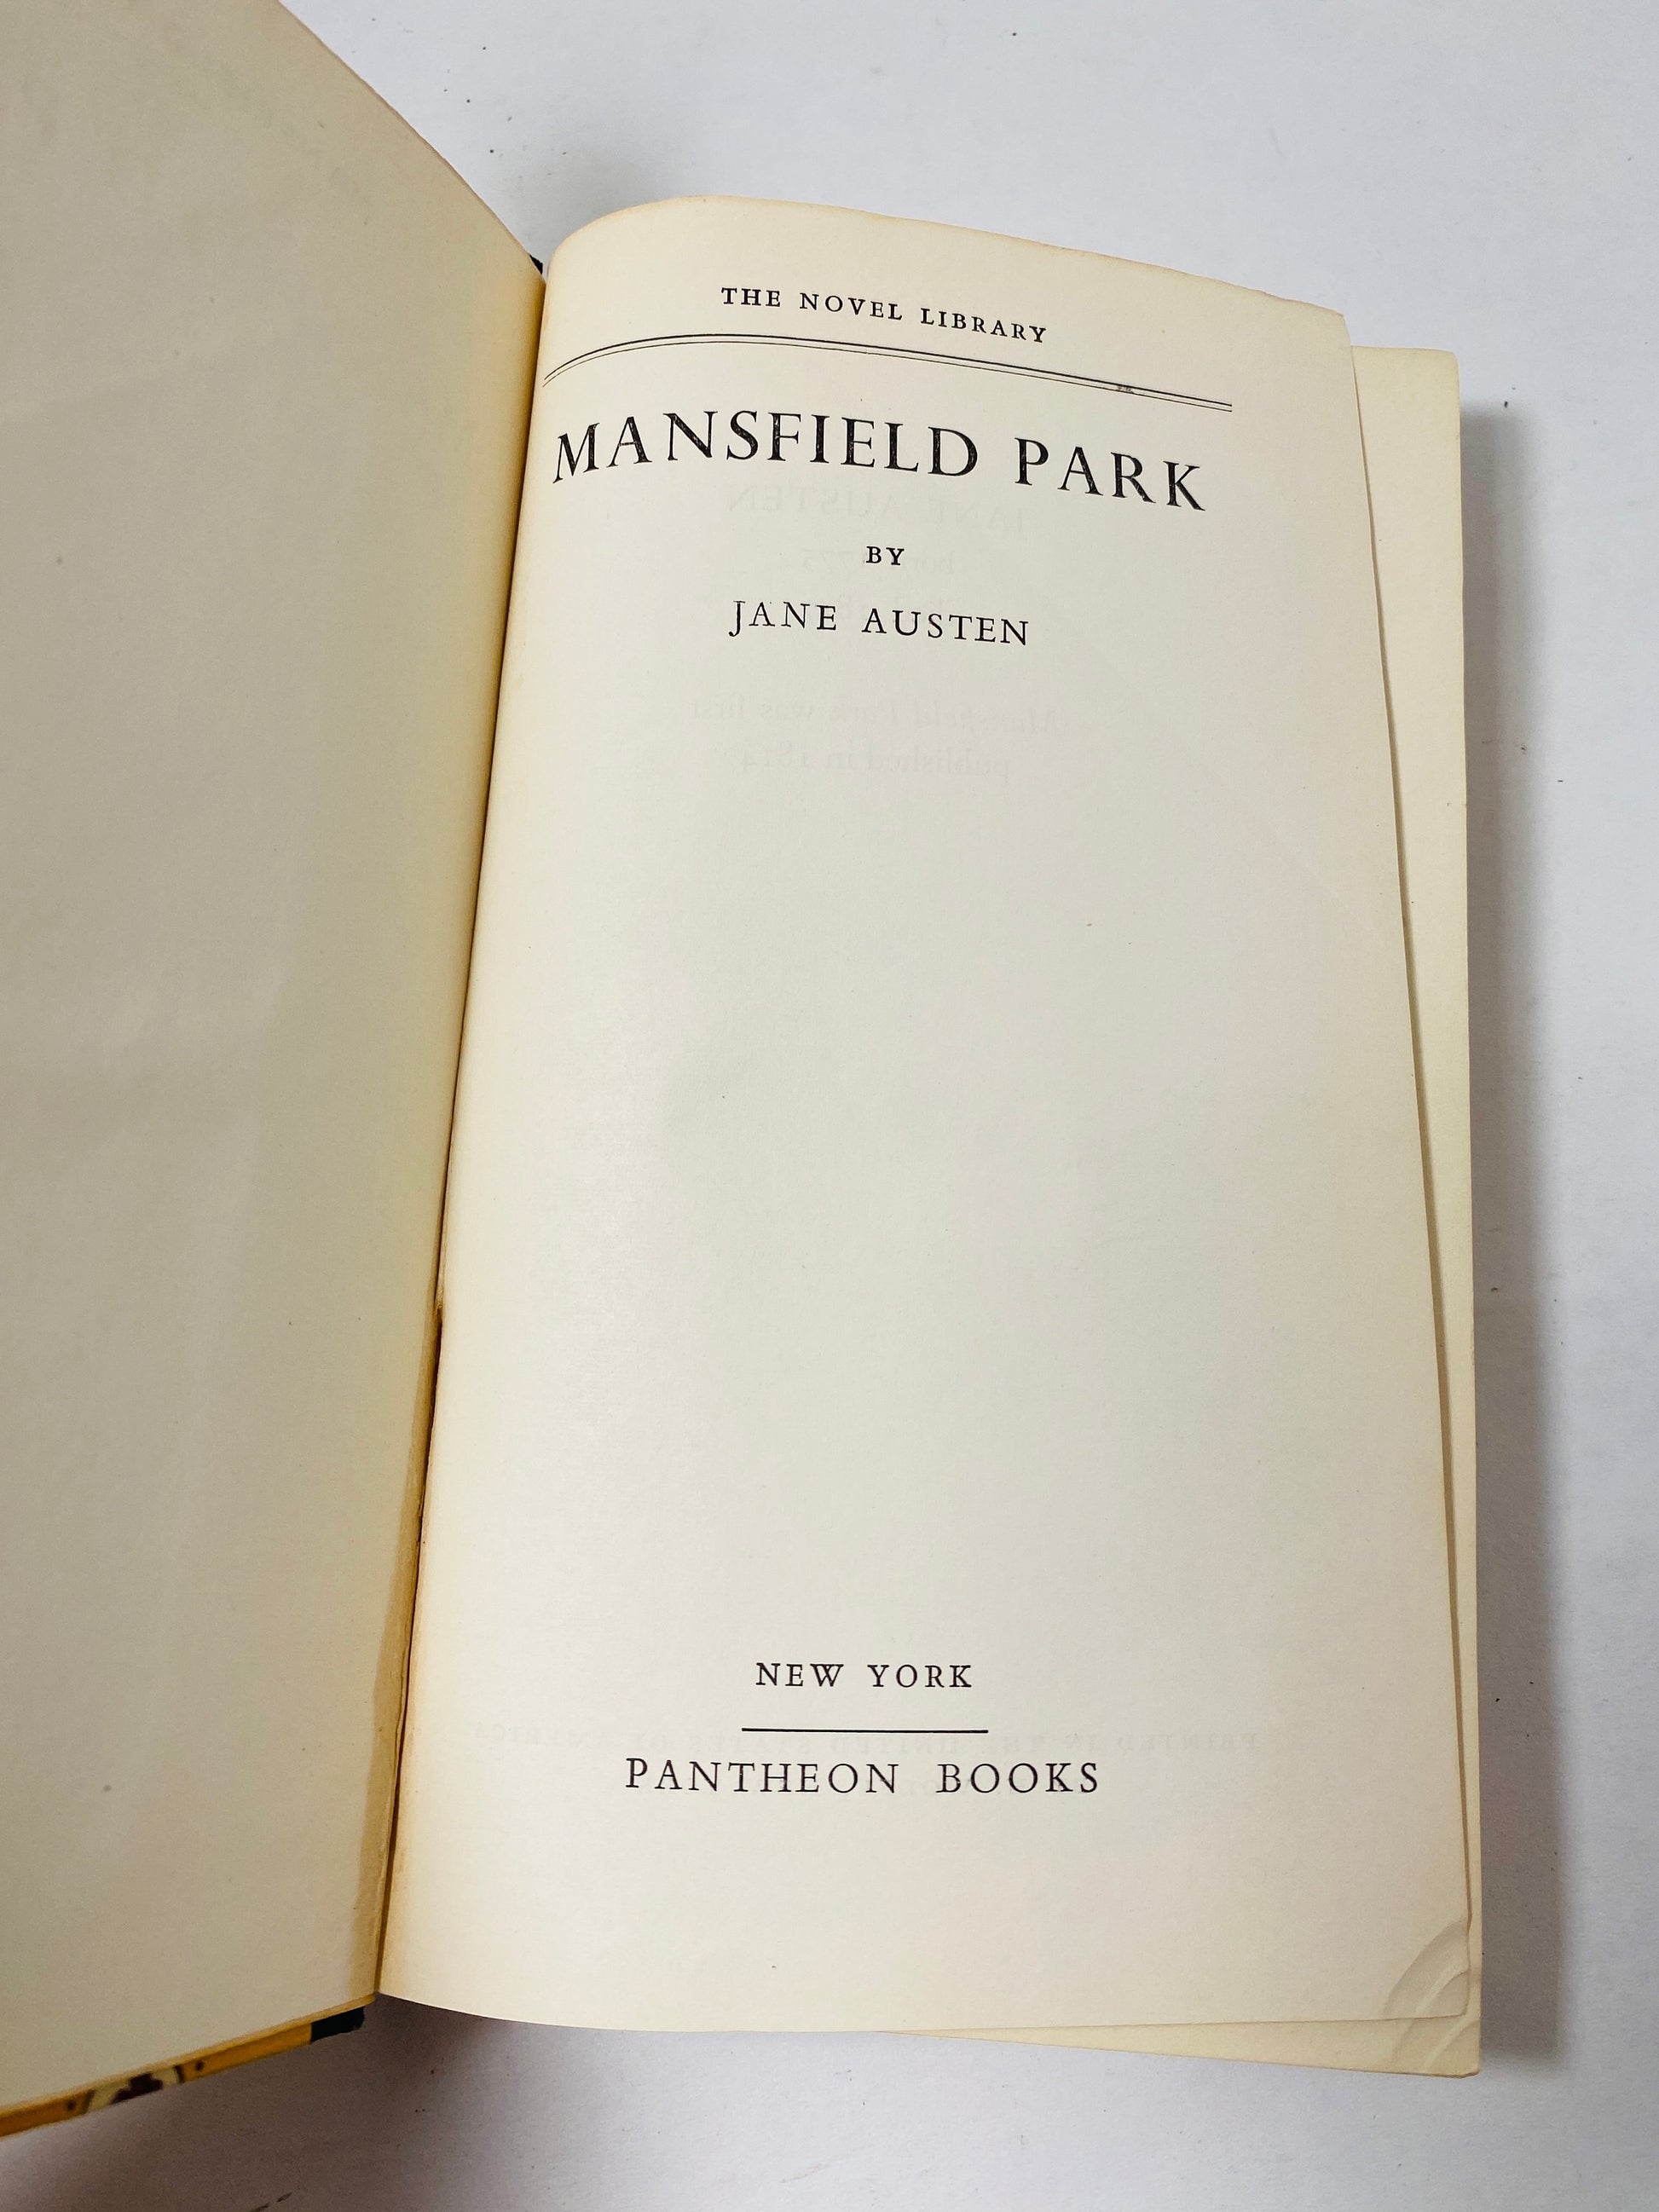 1950 Mansfield Park vintage book by Jane Austen Pantheon published in New York Spirited intelligent woman. Book lover gift